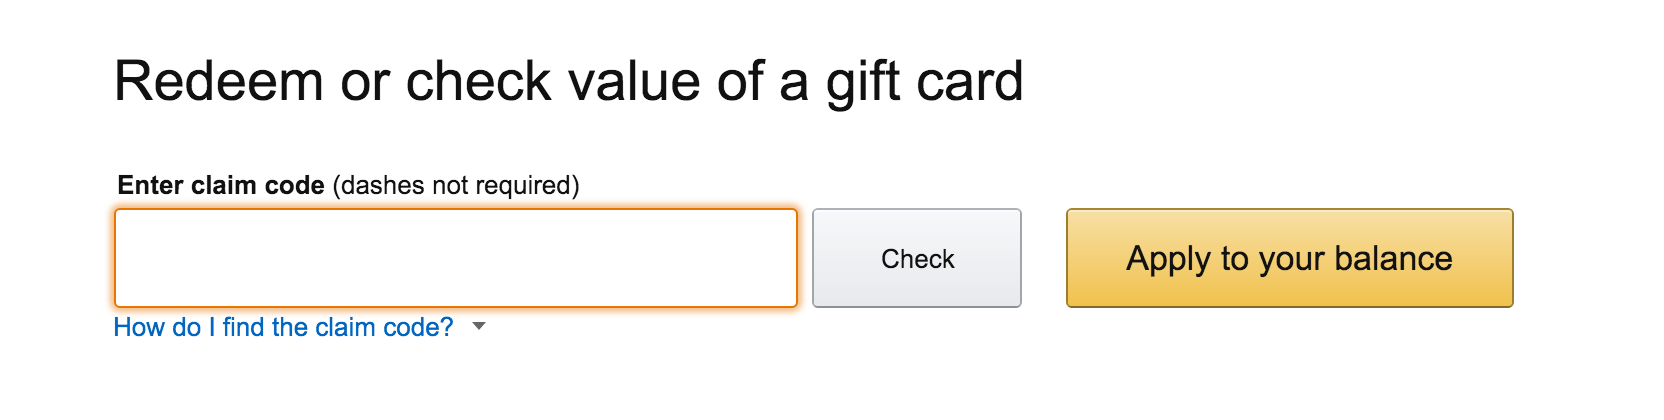 Gift Card Balance: Check the Balance of a Gift Card